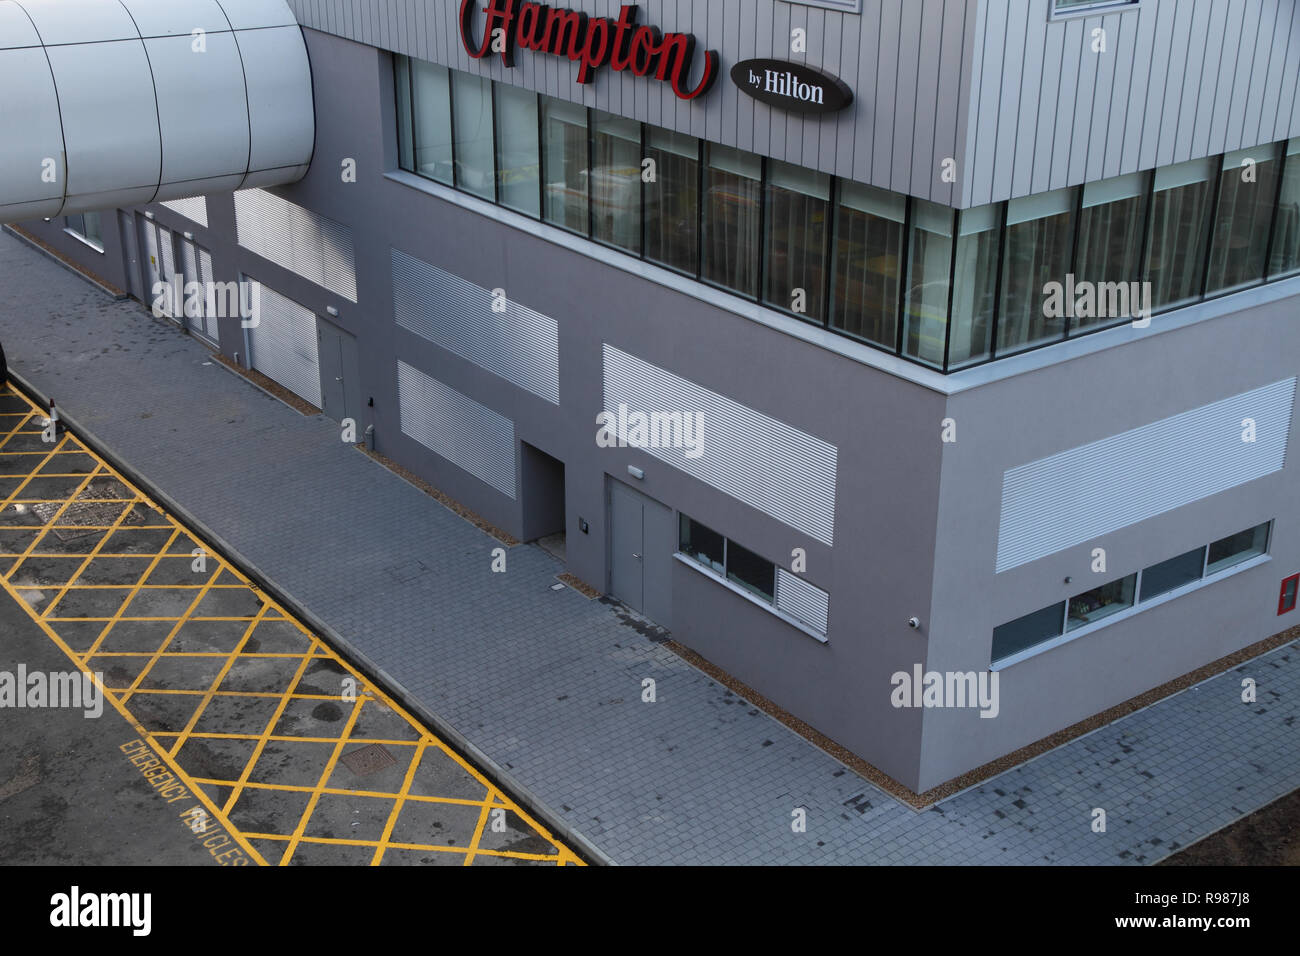 The Hilton Hampton Hotel, London Gatwick Airport, Using Weber exterior render Stock Photo